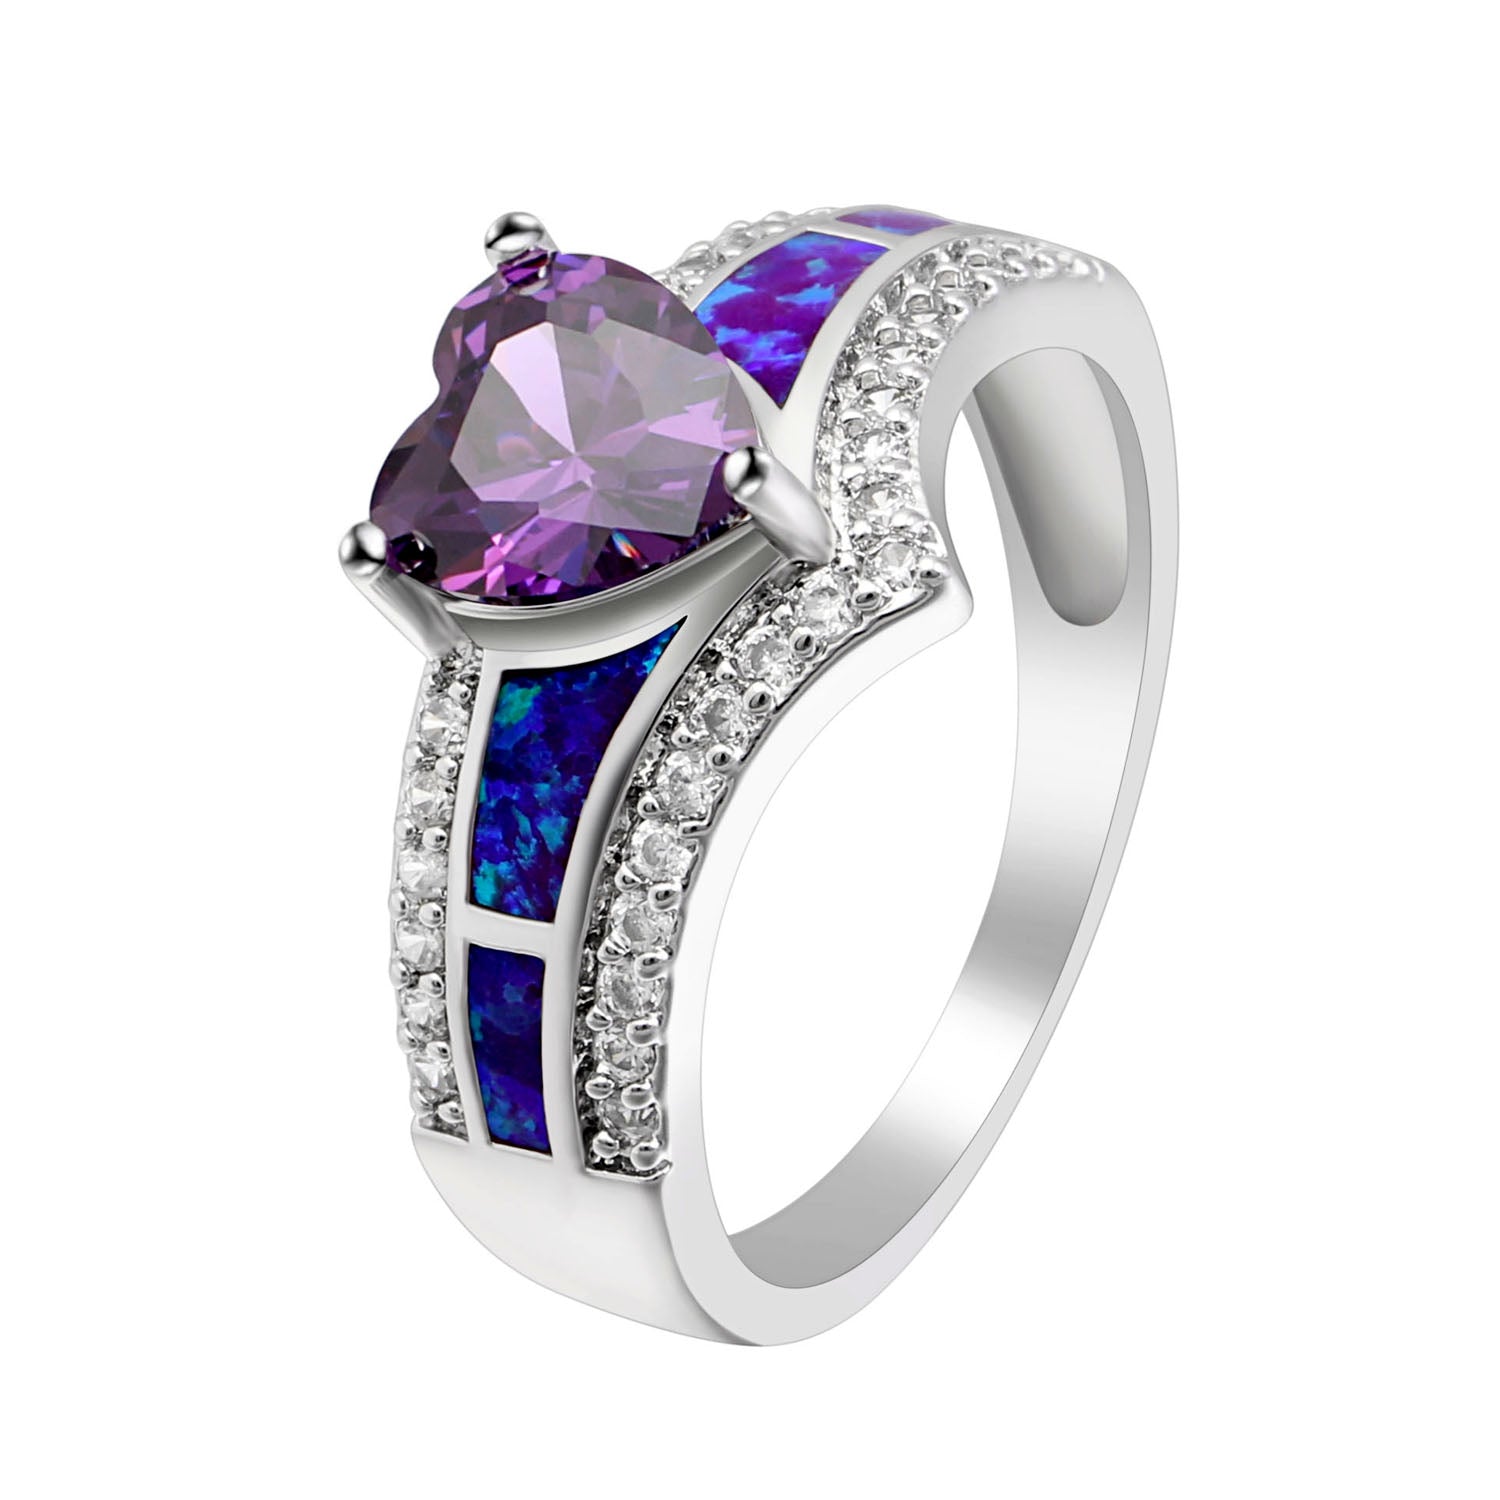 Majestic Heart Cz Promise Ring Created Fire Opal Girl Women Ginger Lyne - Purple,10